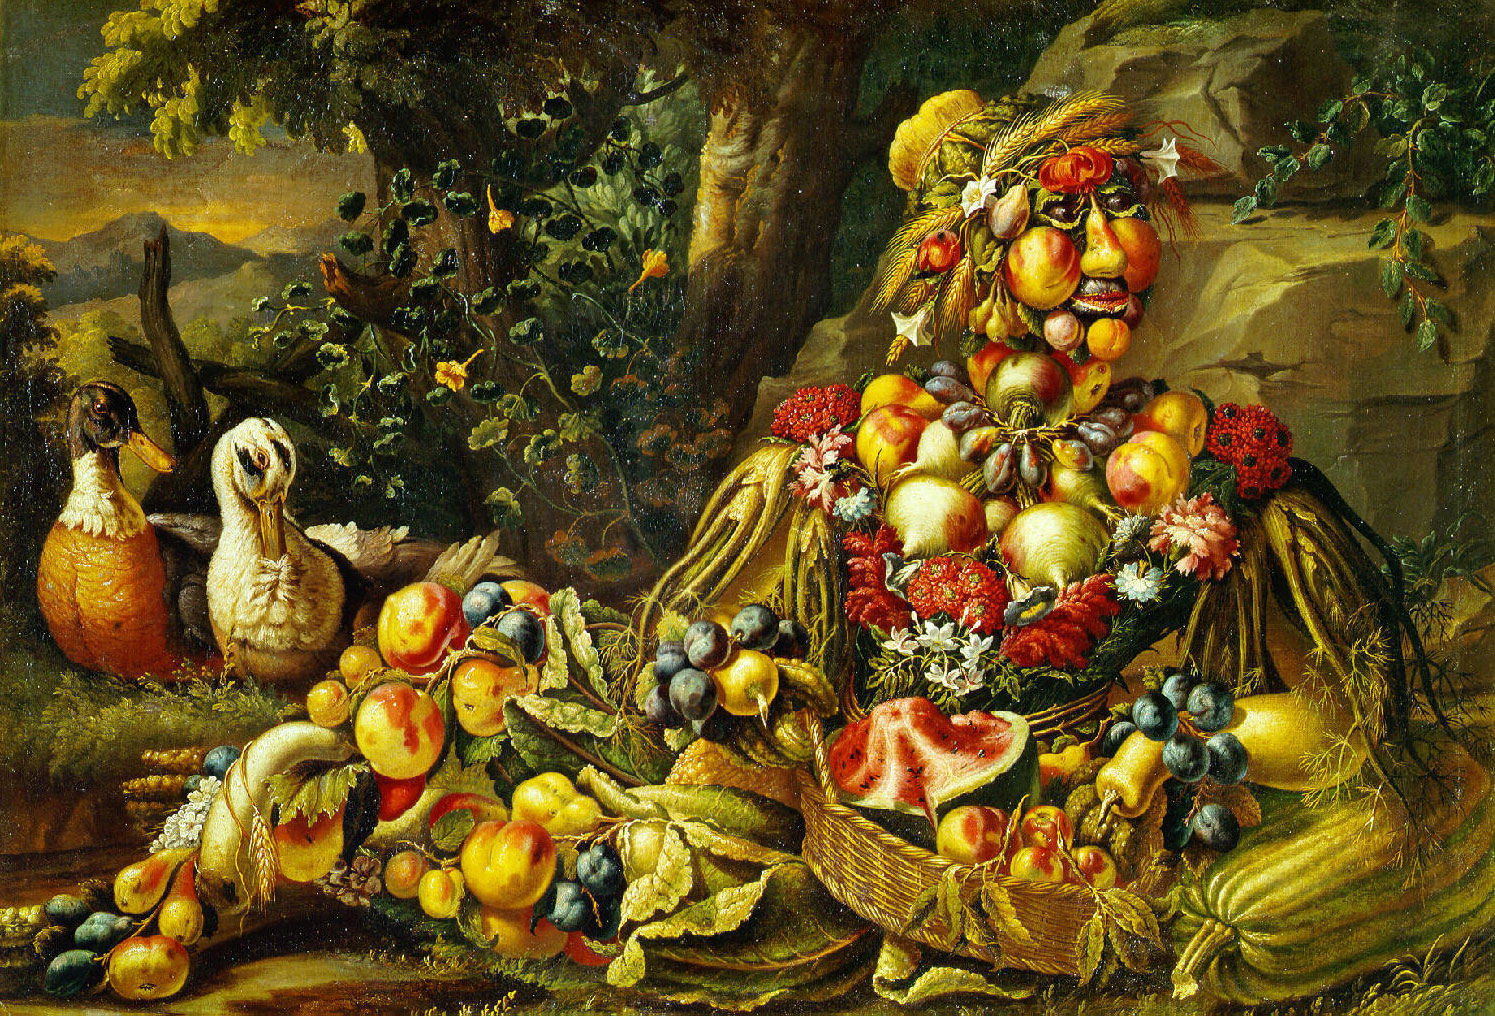 Antonio Rasio: Allegory of Summer in the style of Giuseppe Arcimboldo, circa 1685-1695